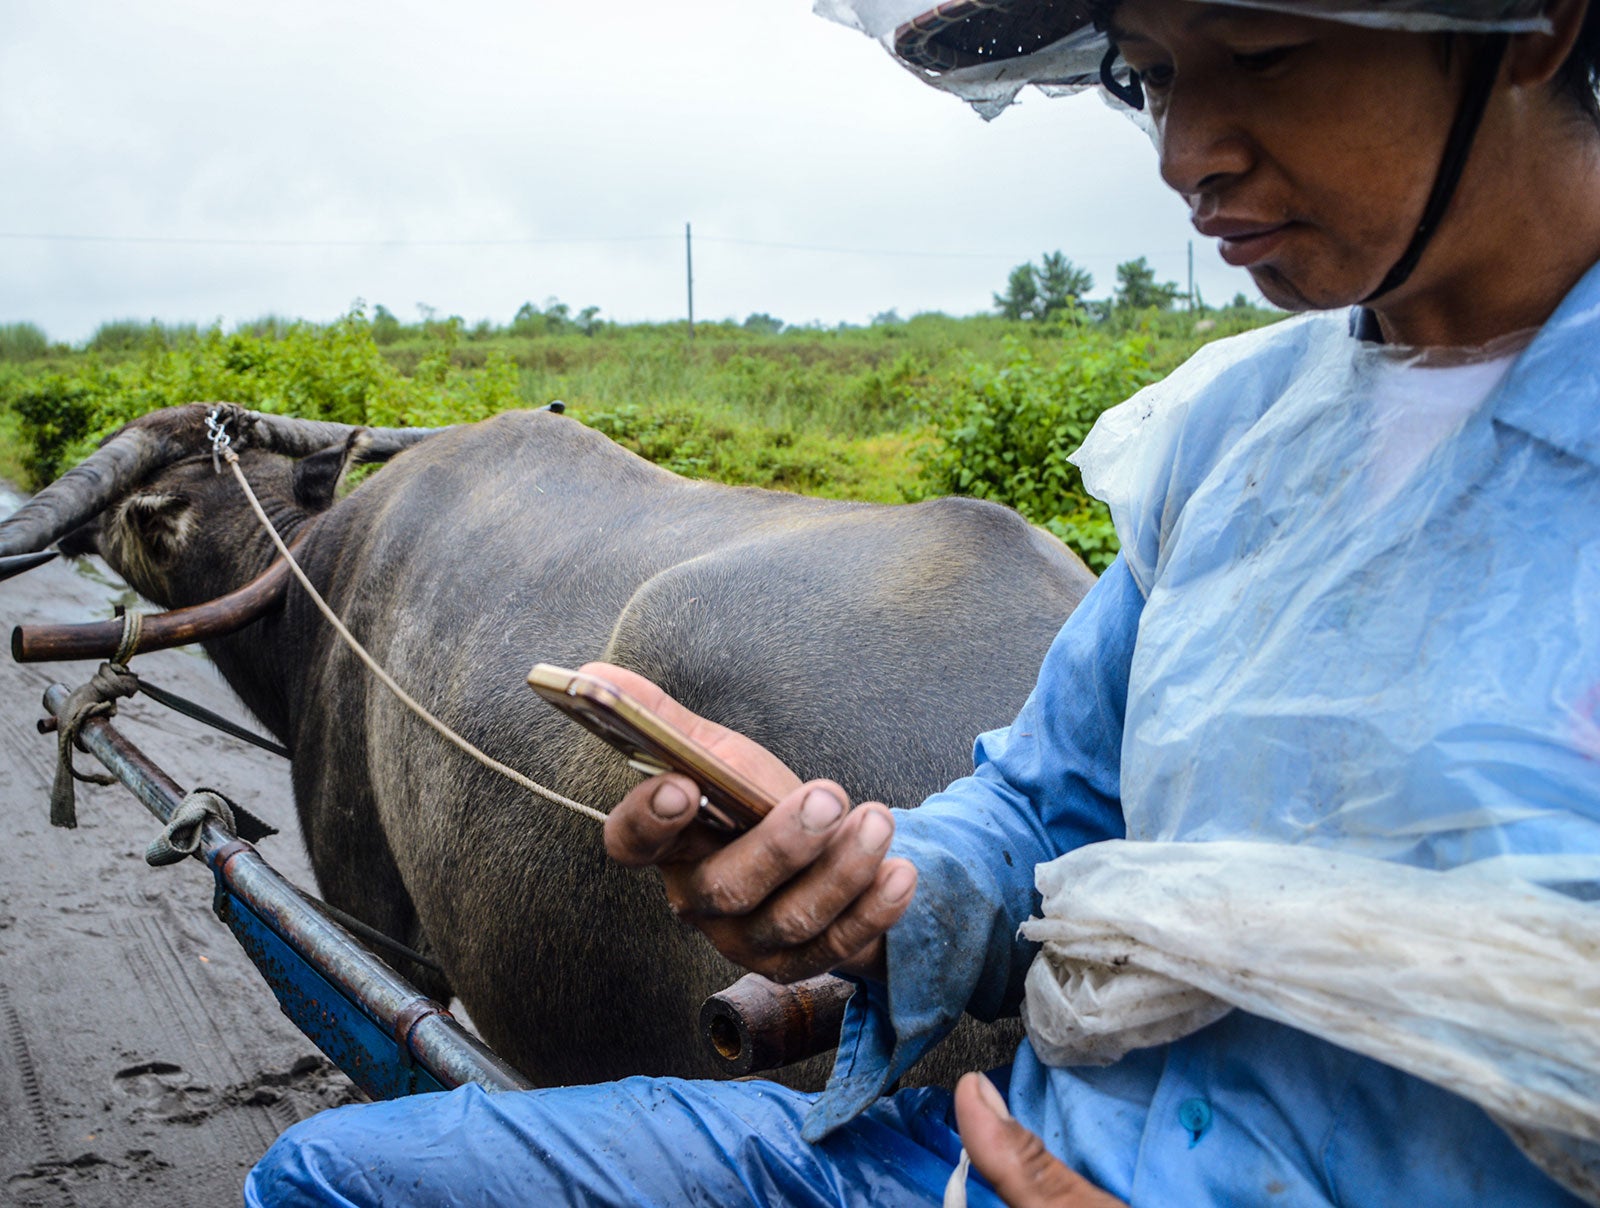 Filipino farmer uses his mobile phone. Photo: Lloyd Ericson Rodriguez, 2016 CGAP Photo Contest